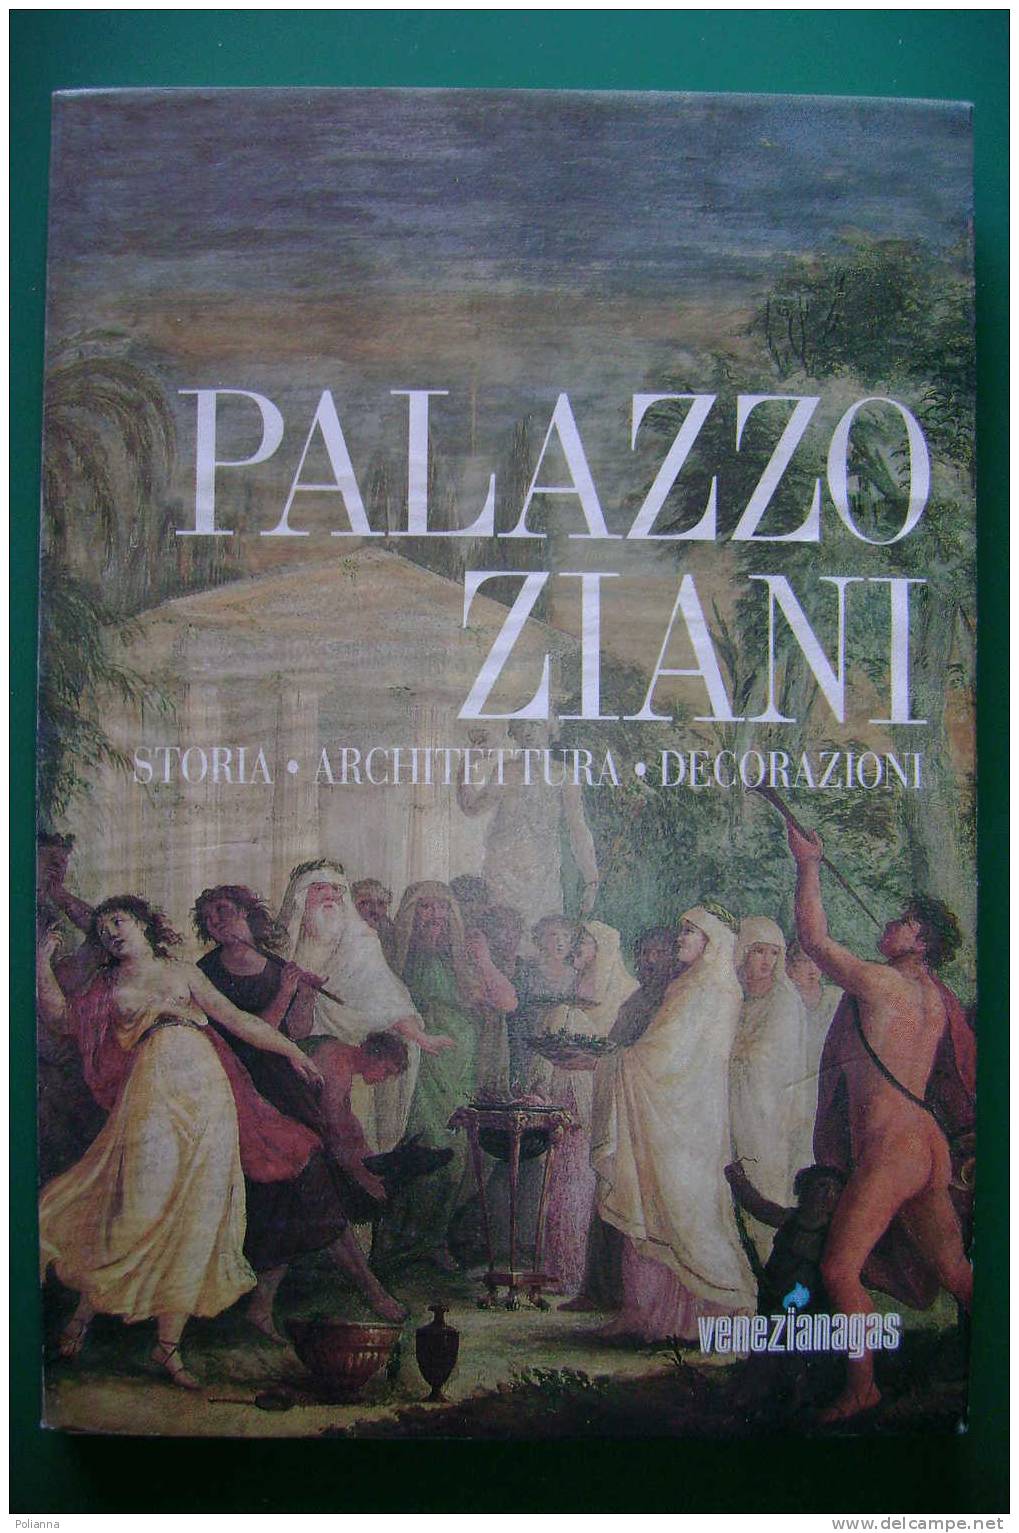 PDG/47 PALAZZO ZIANI Venezianagas 1994/VENEZIA/ARCHITETTURA - Kunst, Antiek